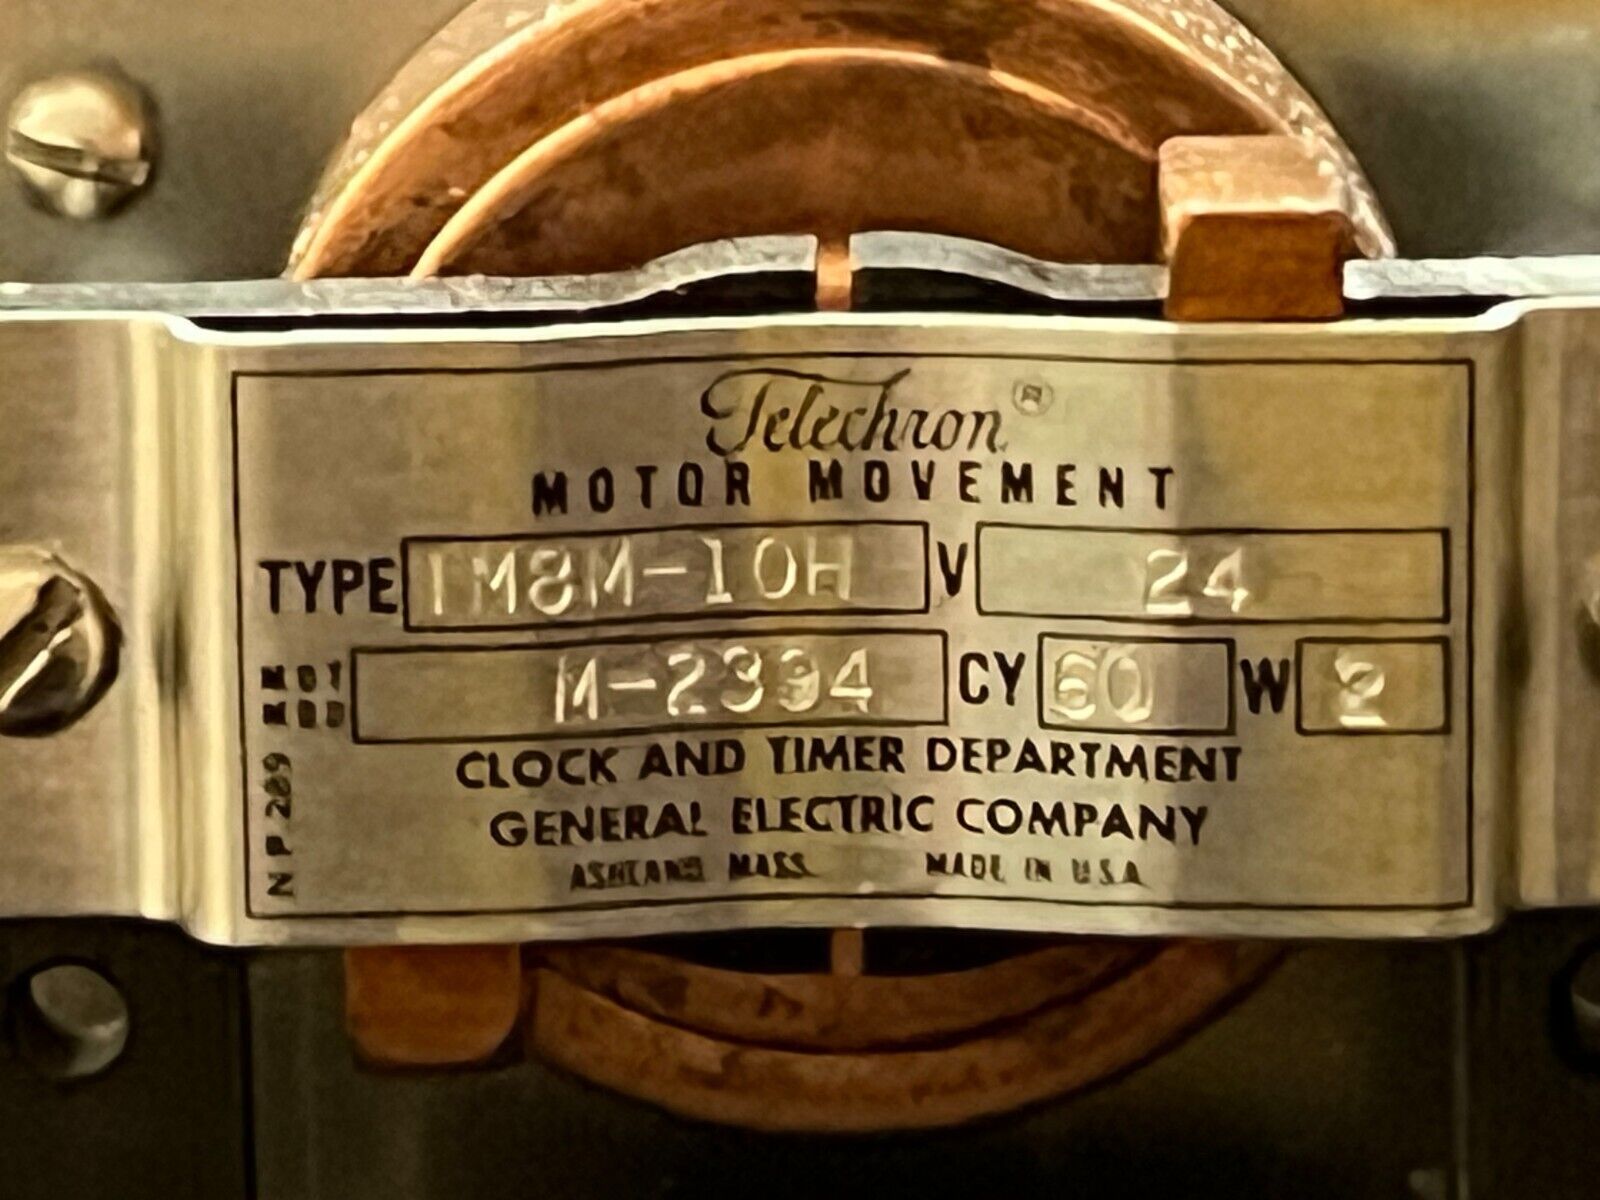 Vintage GE Telechron Timer  Movement Type IM8M-10H Model M-2394 24V